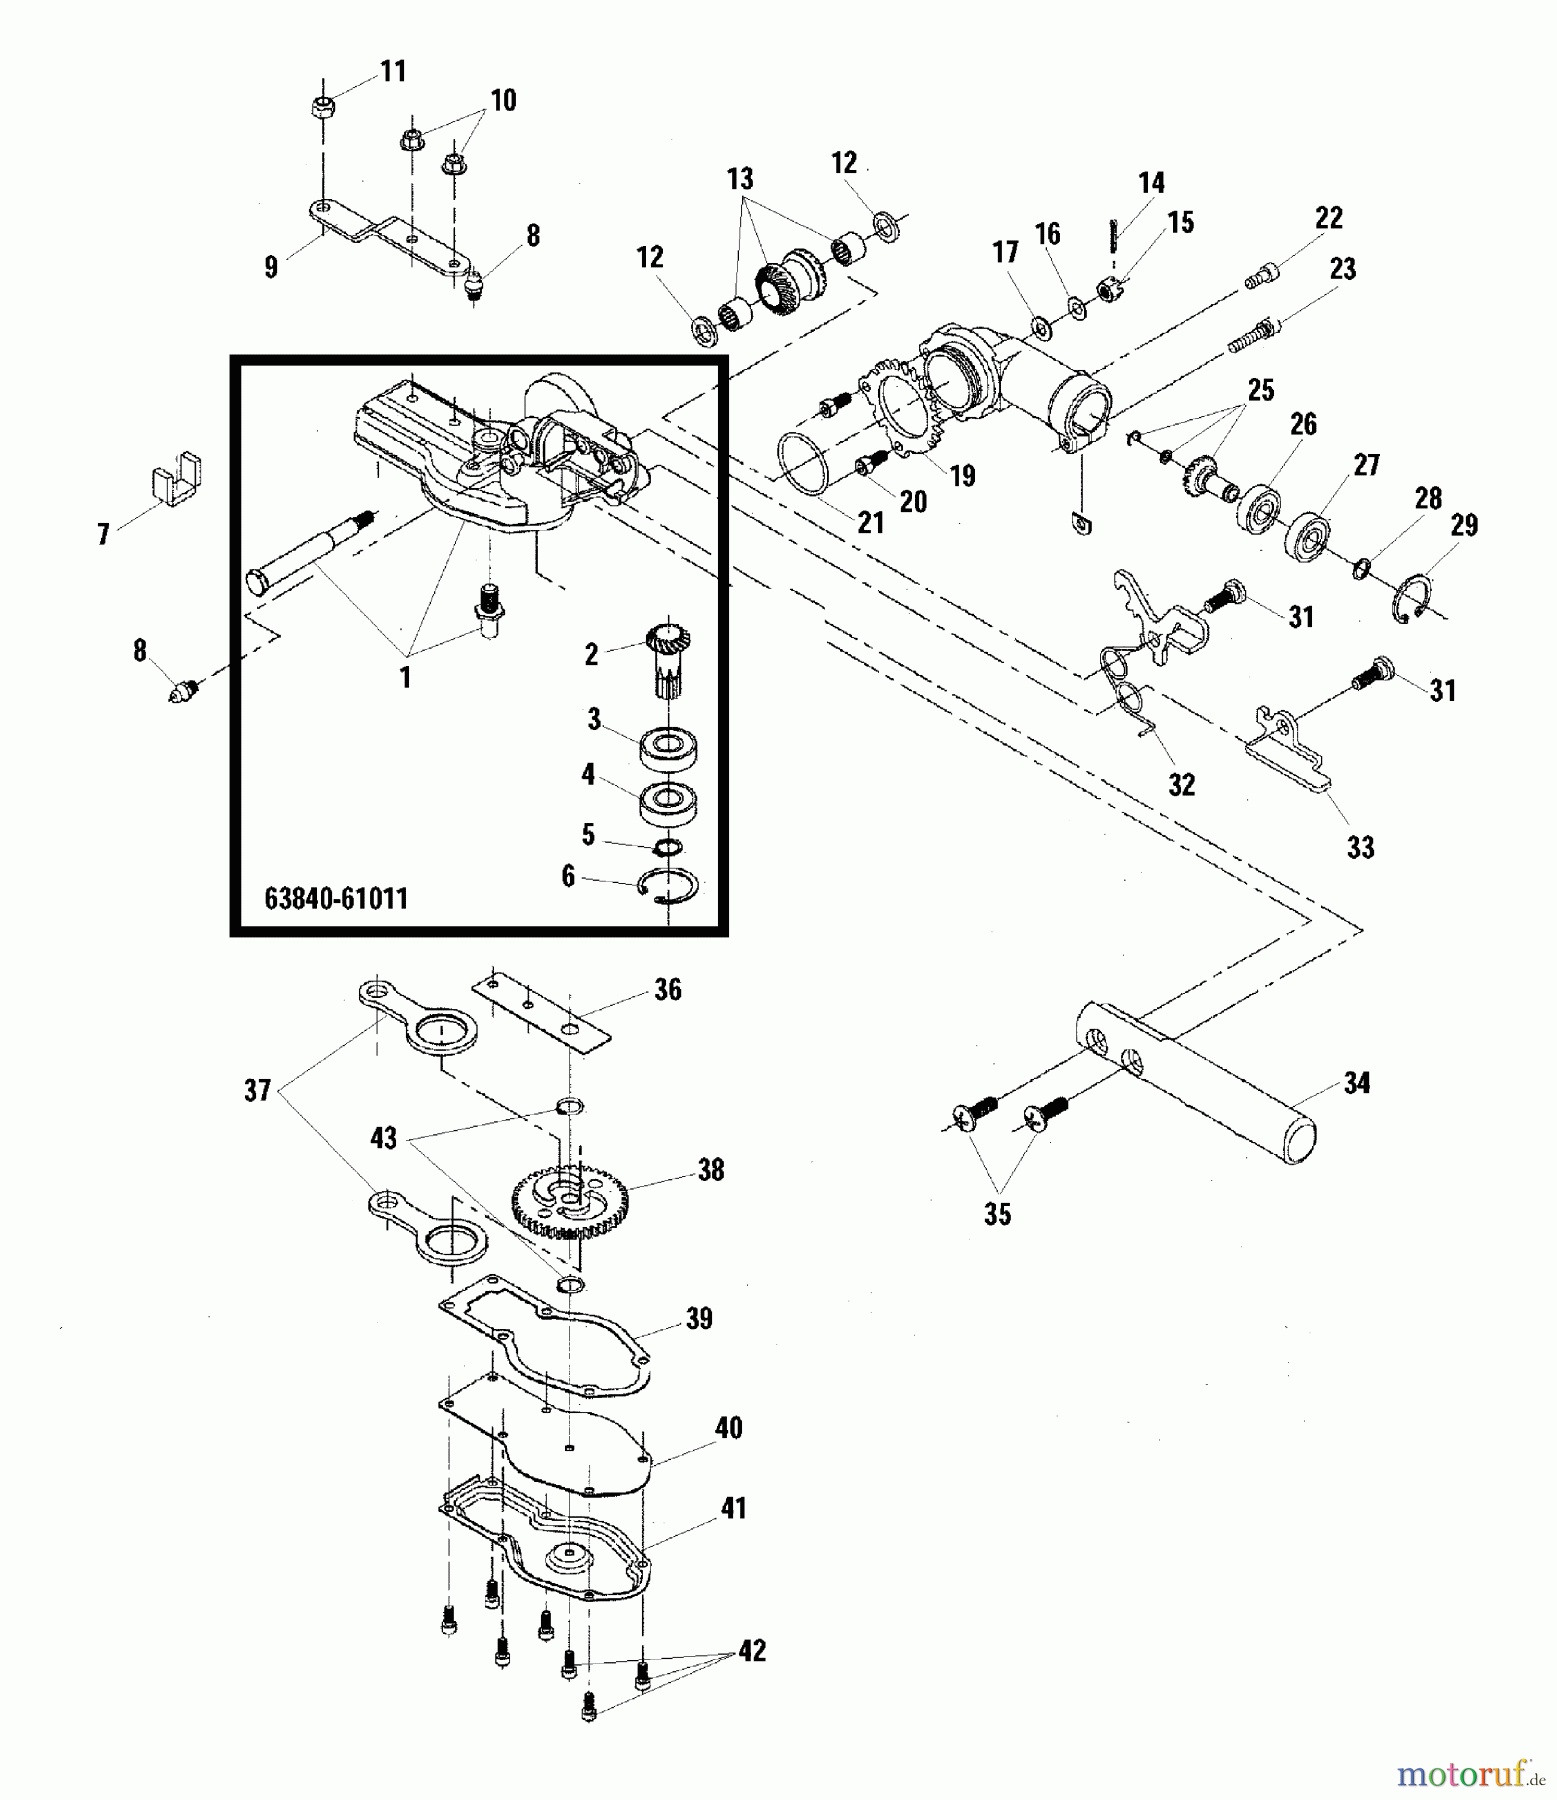  Shindaiwa Heckenscheren AH231 - Shindaiwa Articulating Hedge Trimmer Gear Case